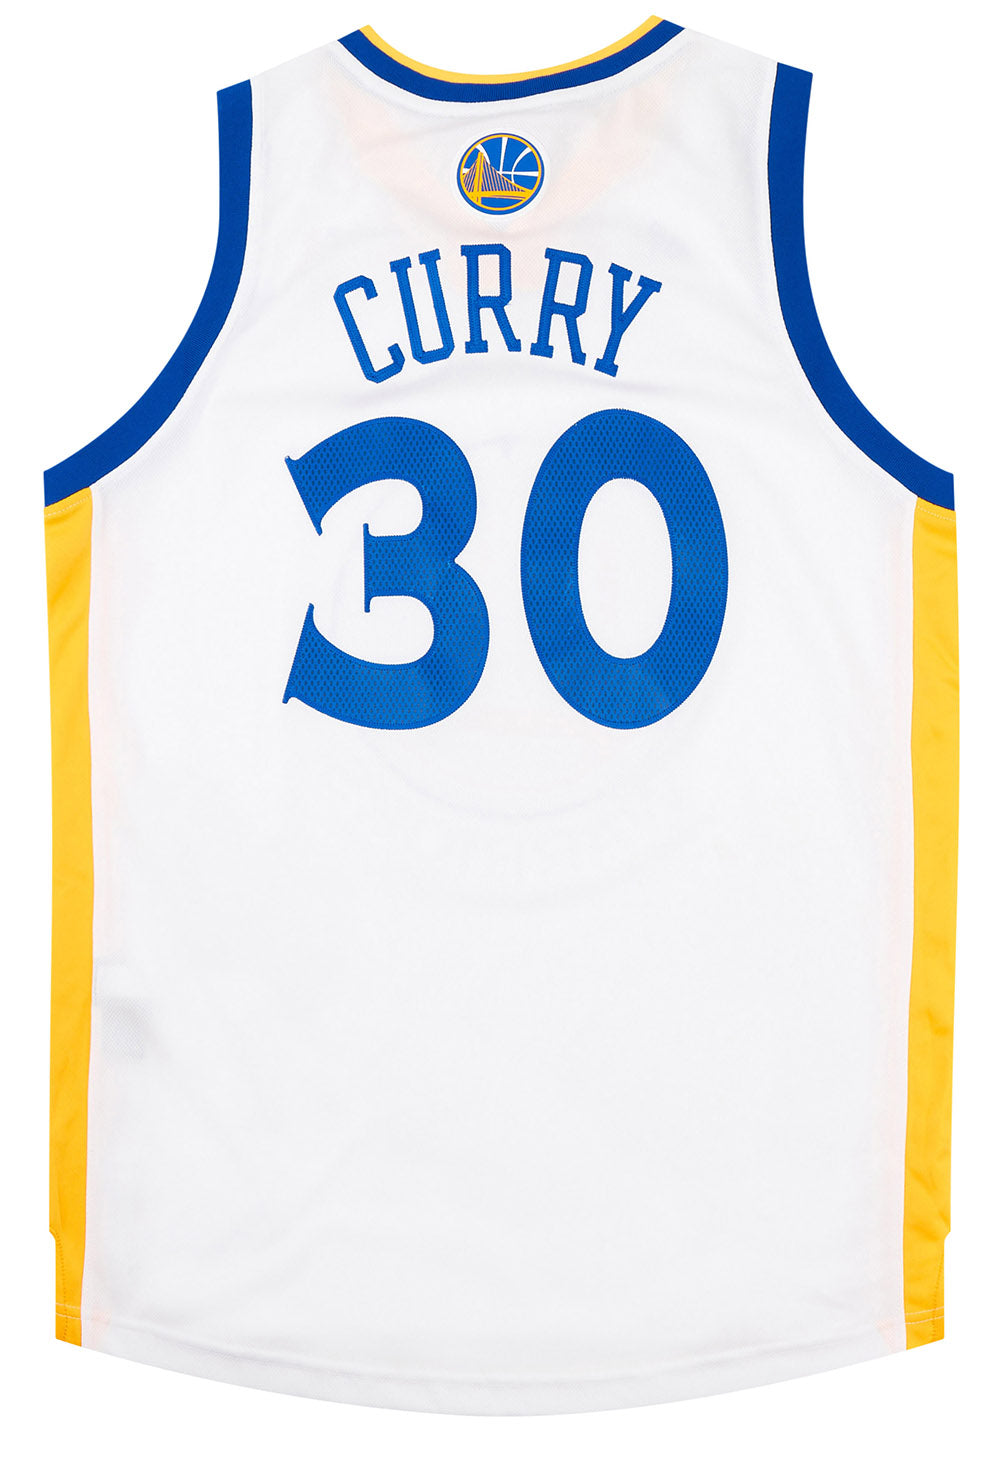 Golden State Warriors Stephen Curry #30 Swingman Jersey + shorts kids size  m